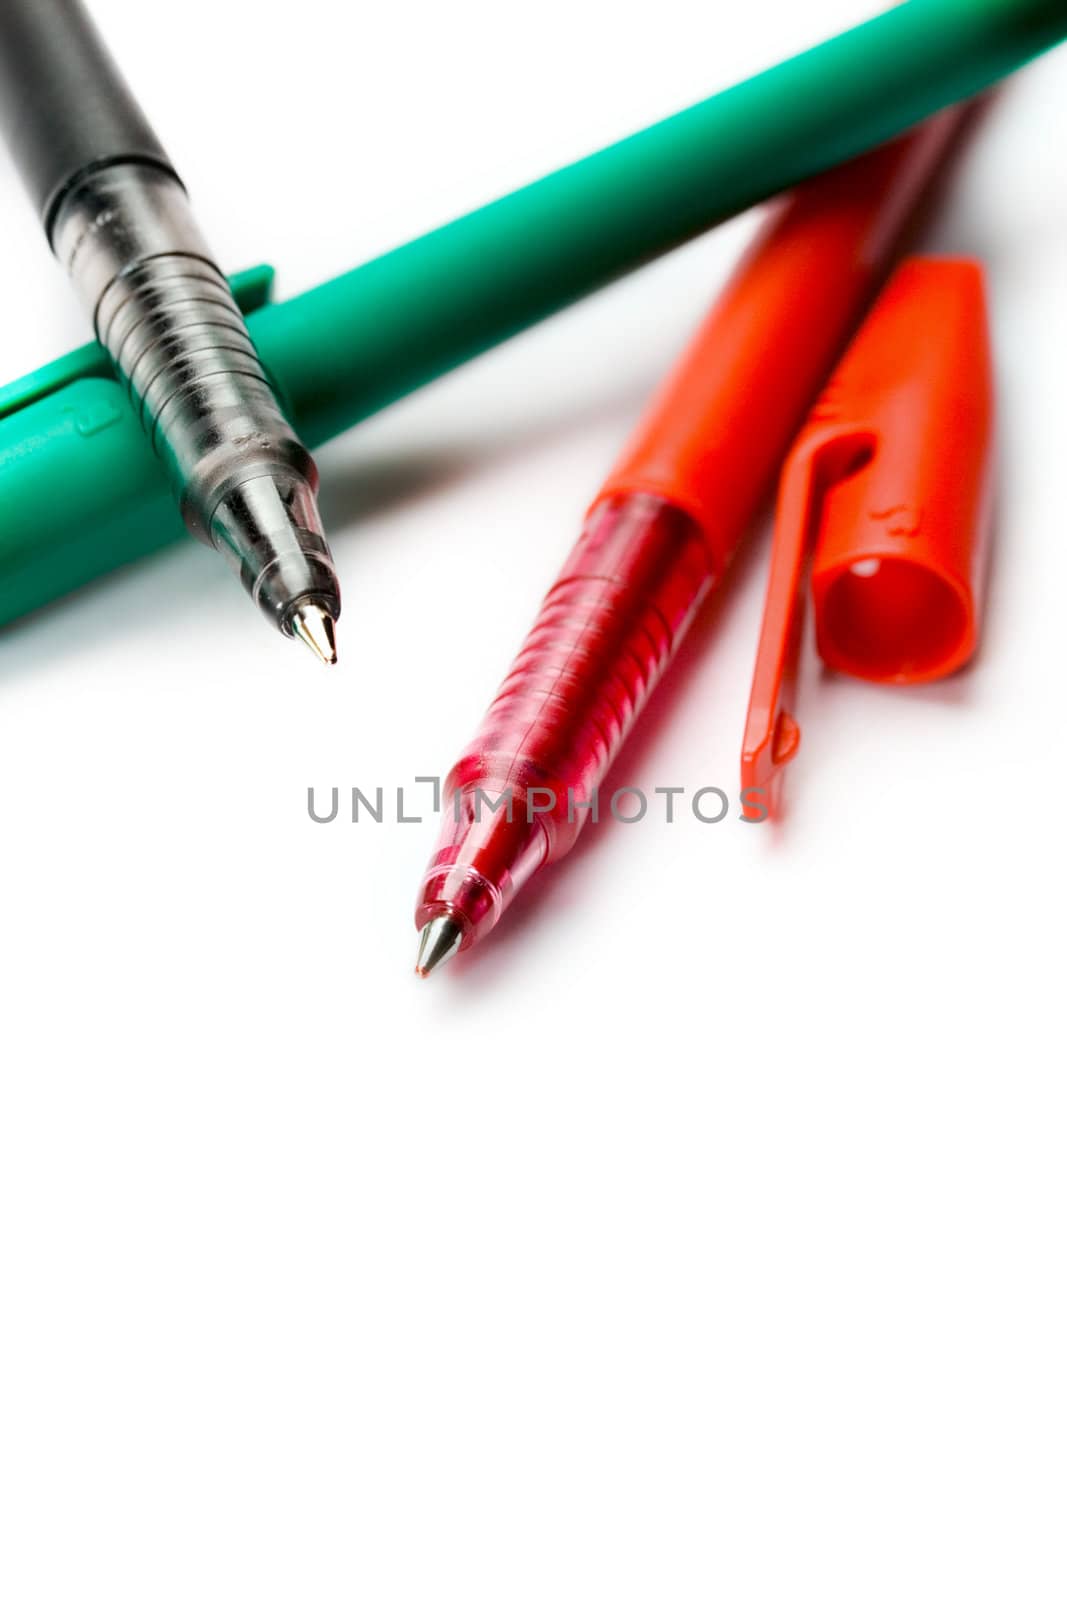 Pens isolated on white by Garsya